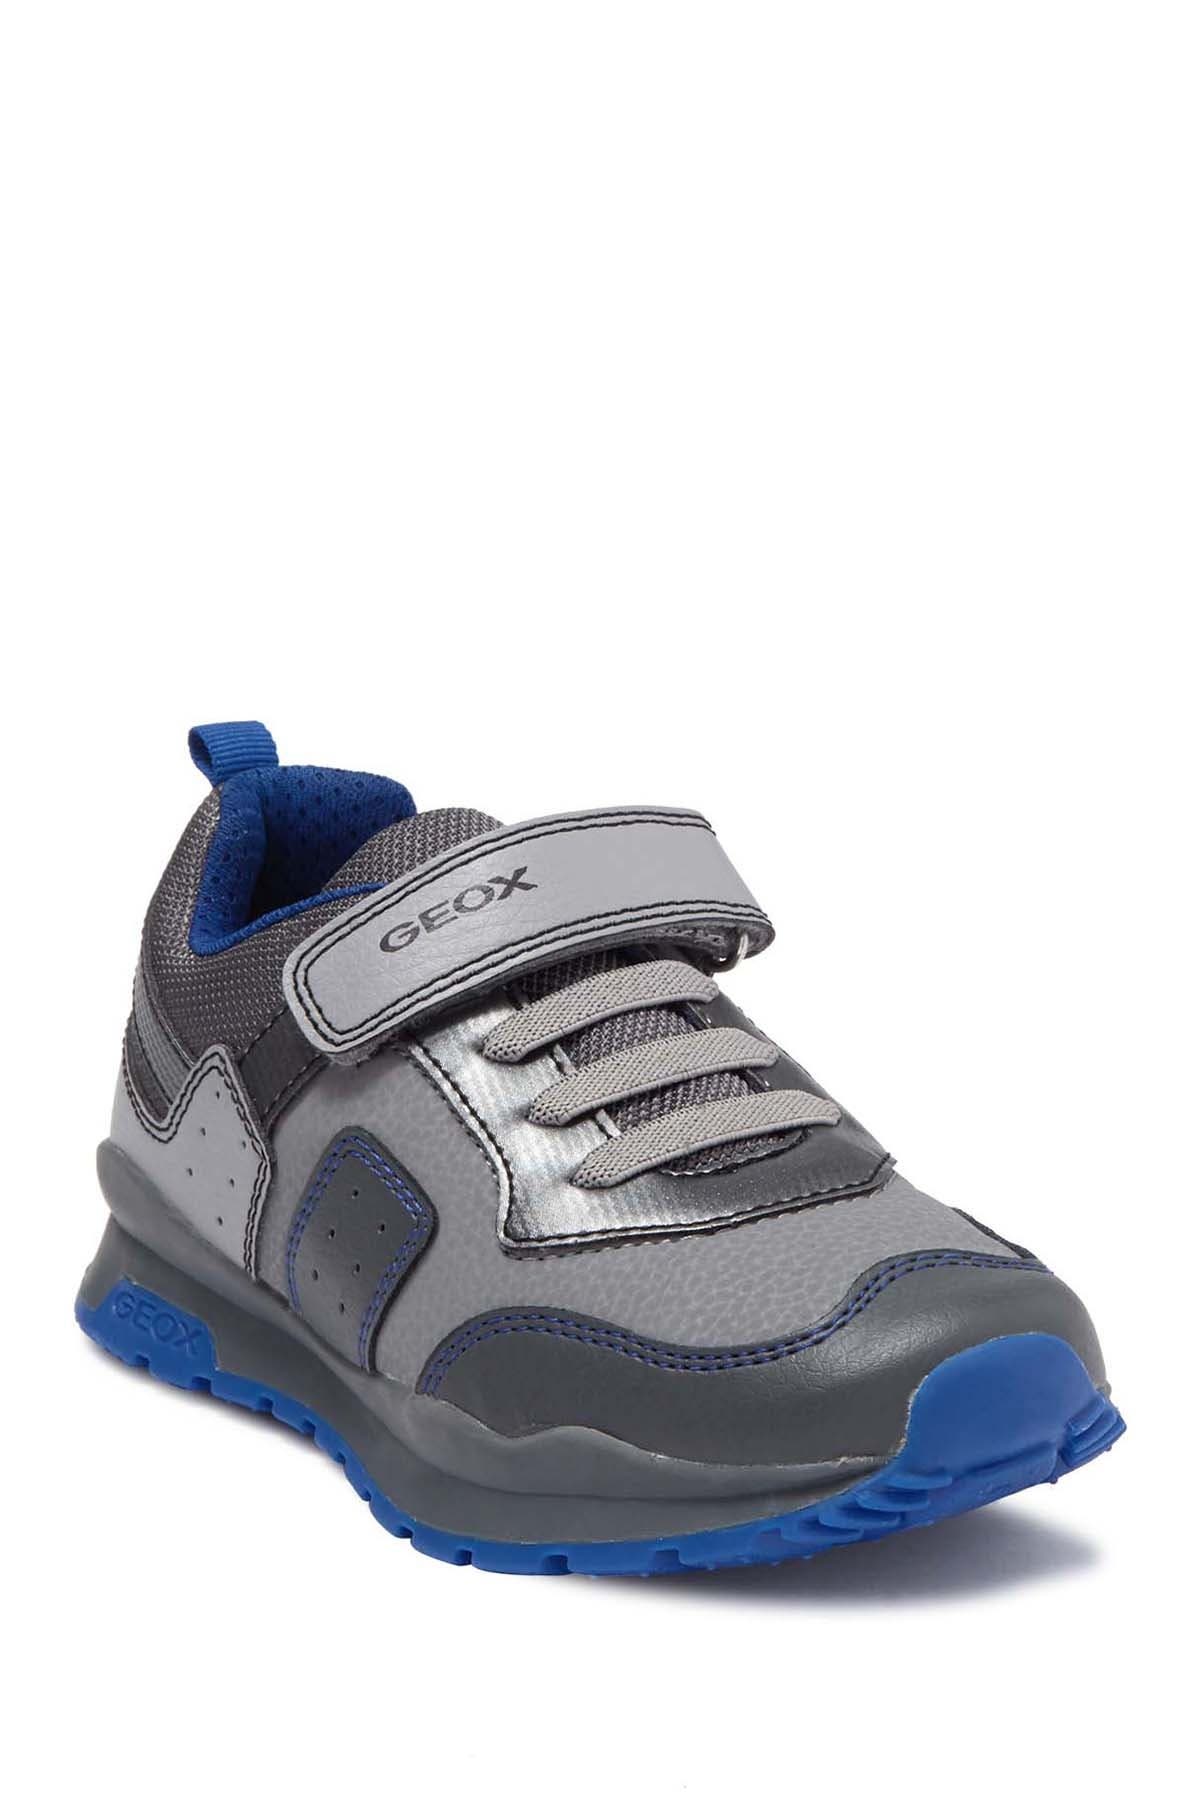 GEOX Kids' Boys' Shoes | Nordstrom Rack